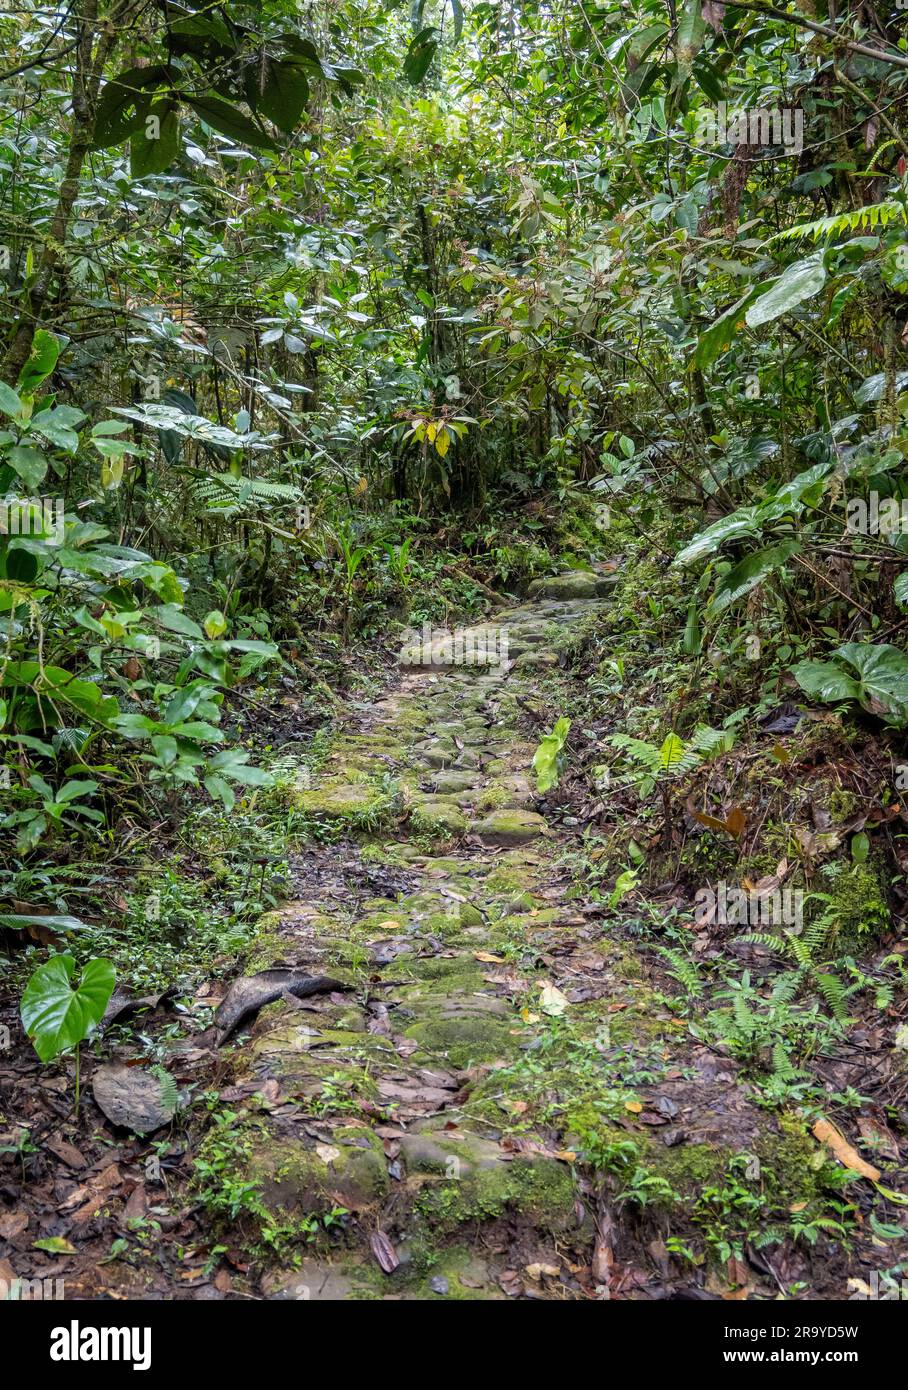 Ancient trails paved with cobble stones. Serranía De Los Yariguíes Parque Nacional Natural. Colombia, South America. Stock Photo